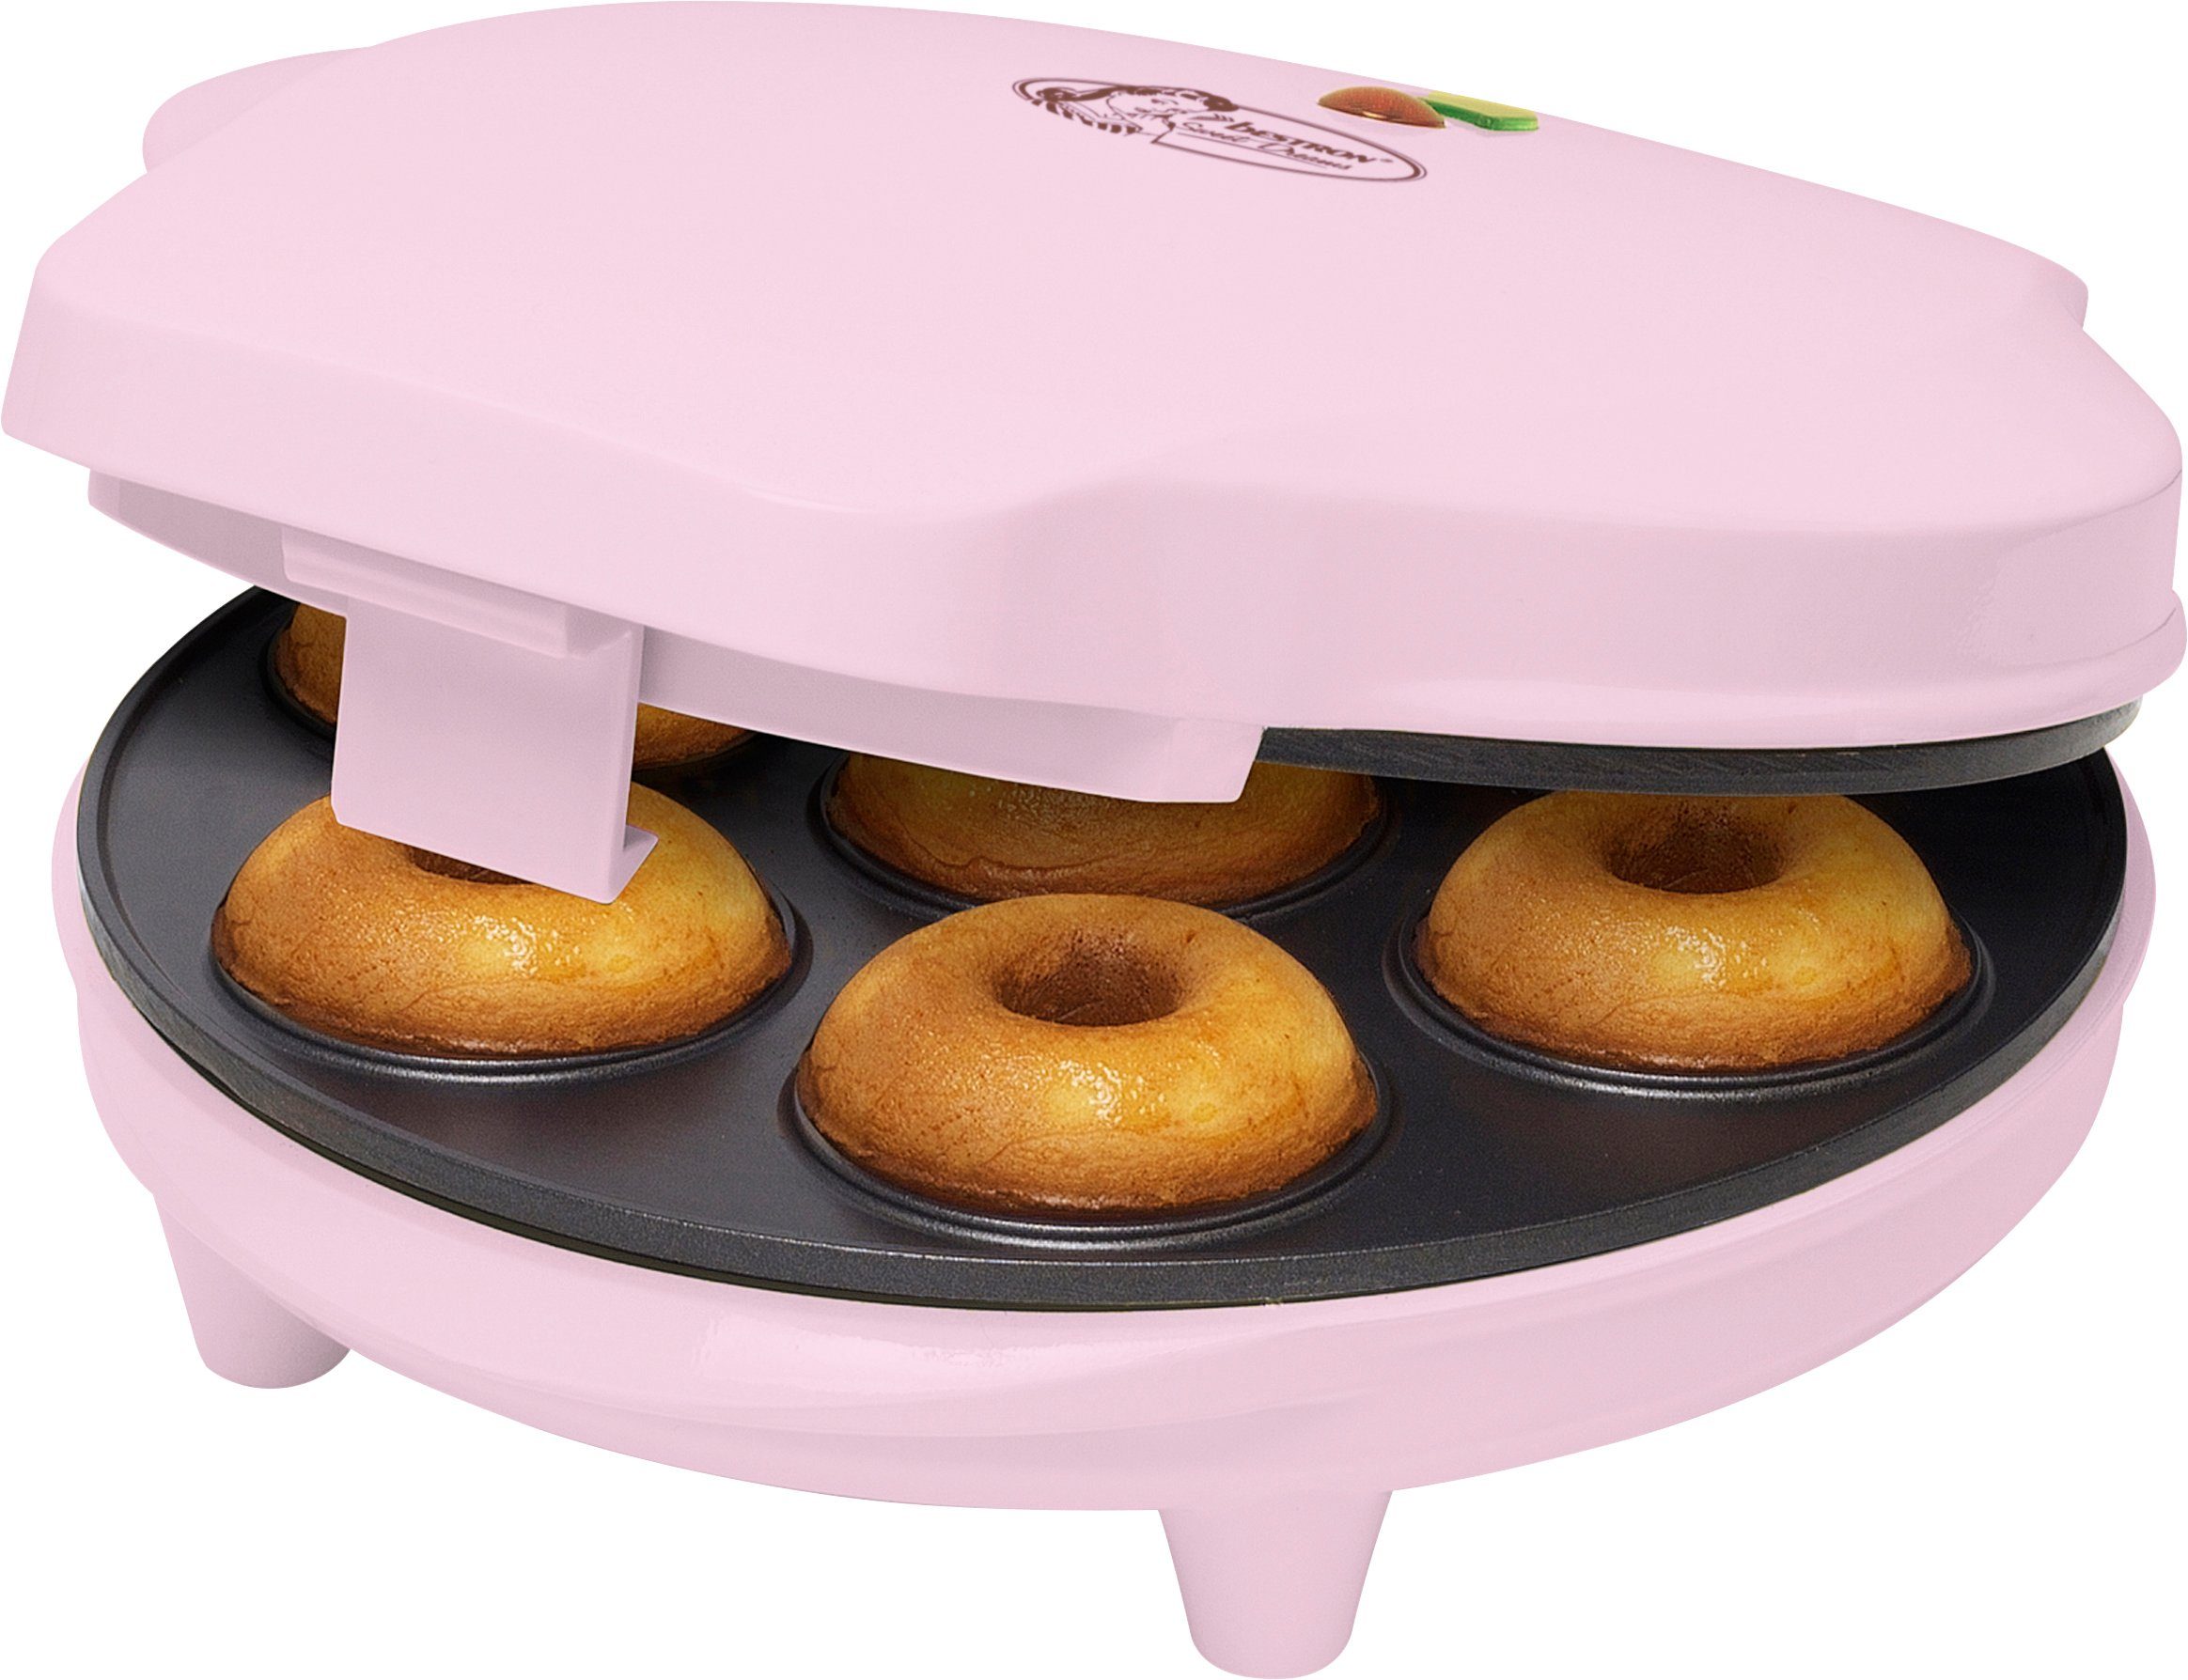 W, bestron Antihaftbeschichtung, Waffeleisen Design, im Donut-Maker Rosa Sweet ADM218SDP, Dreams, 700 Retro